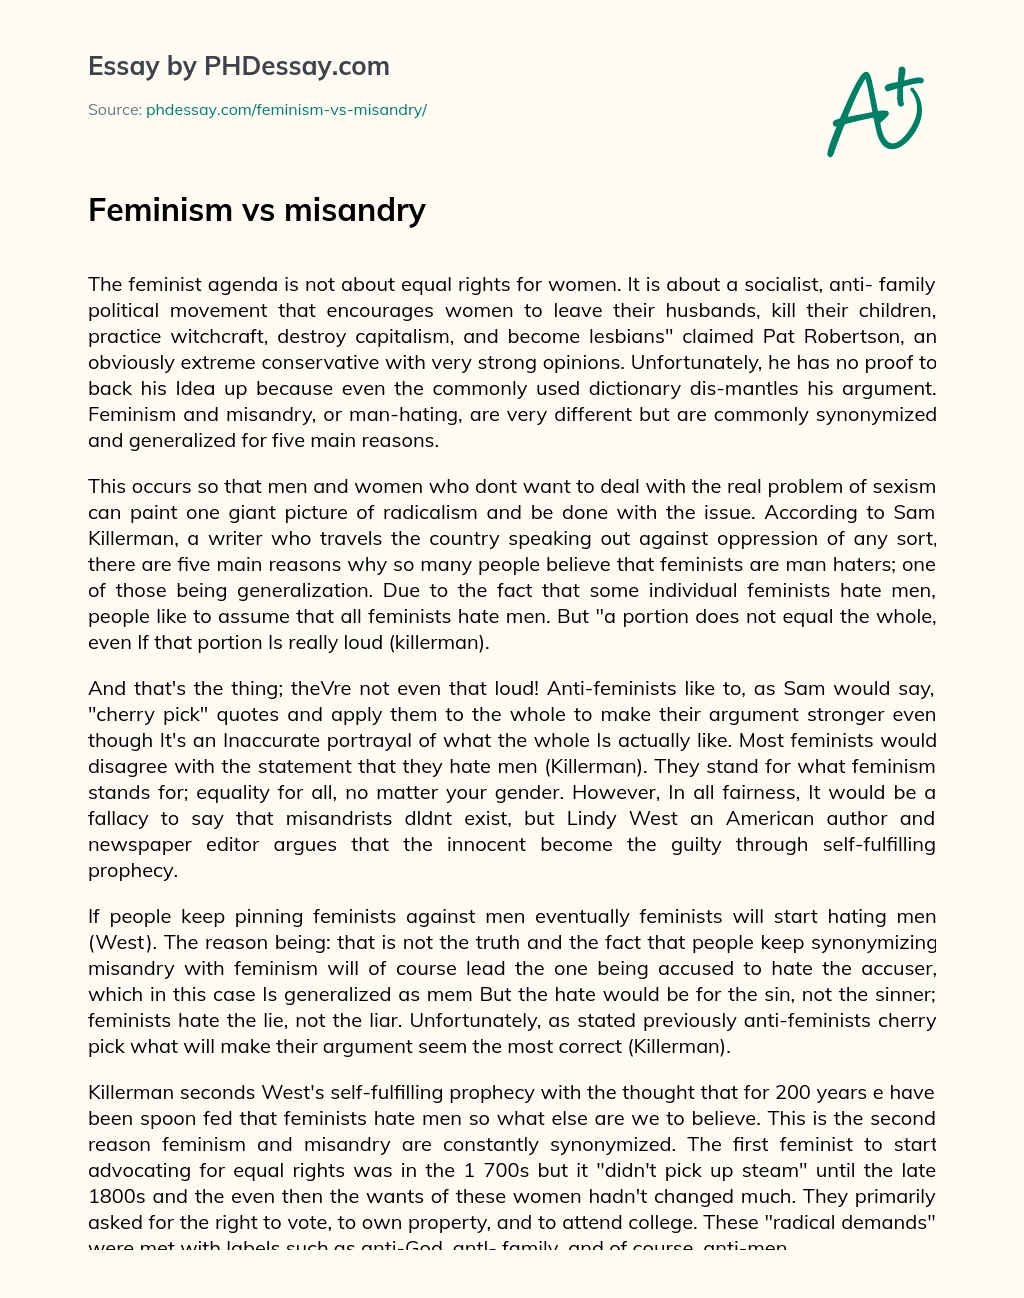 Feminism vs misandry essay